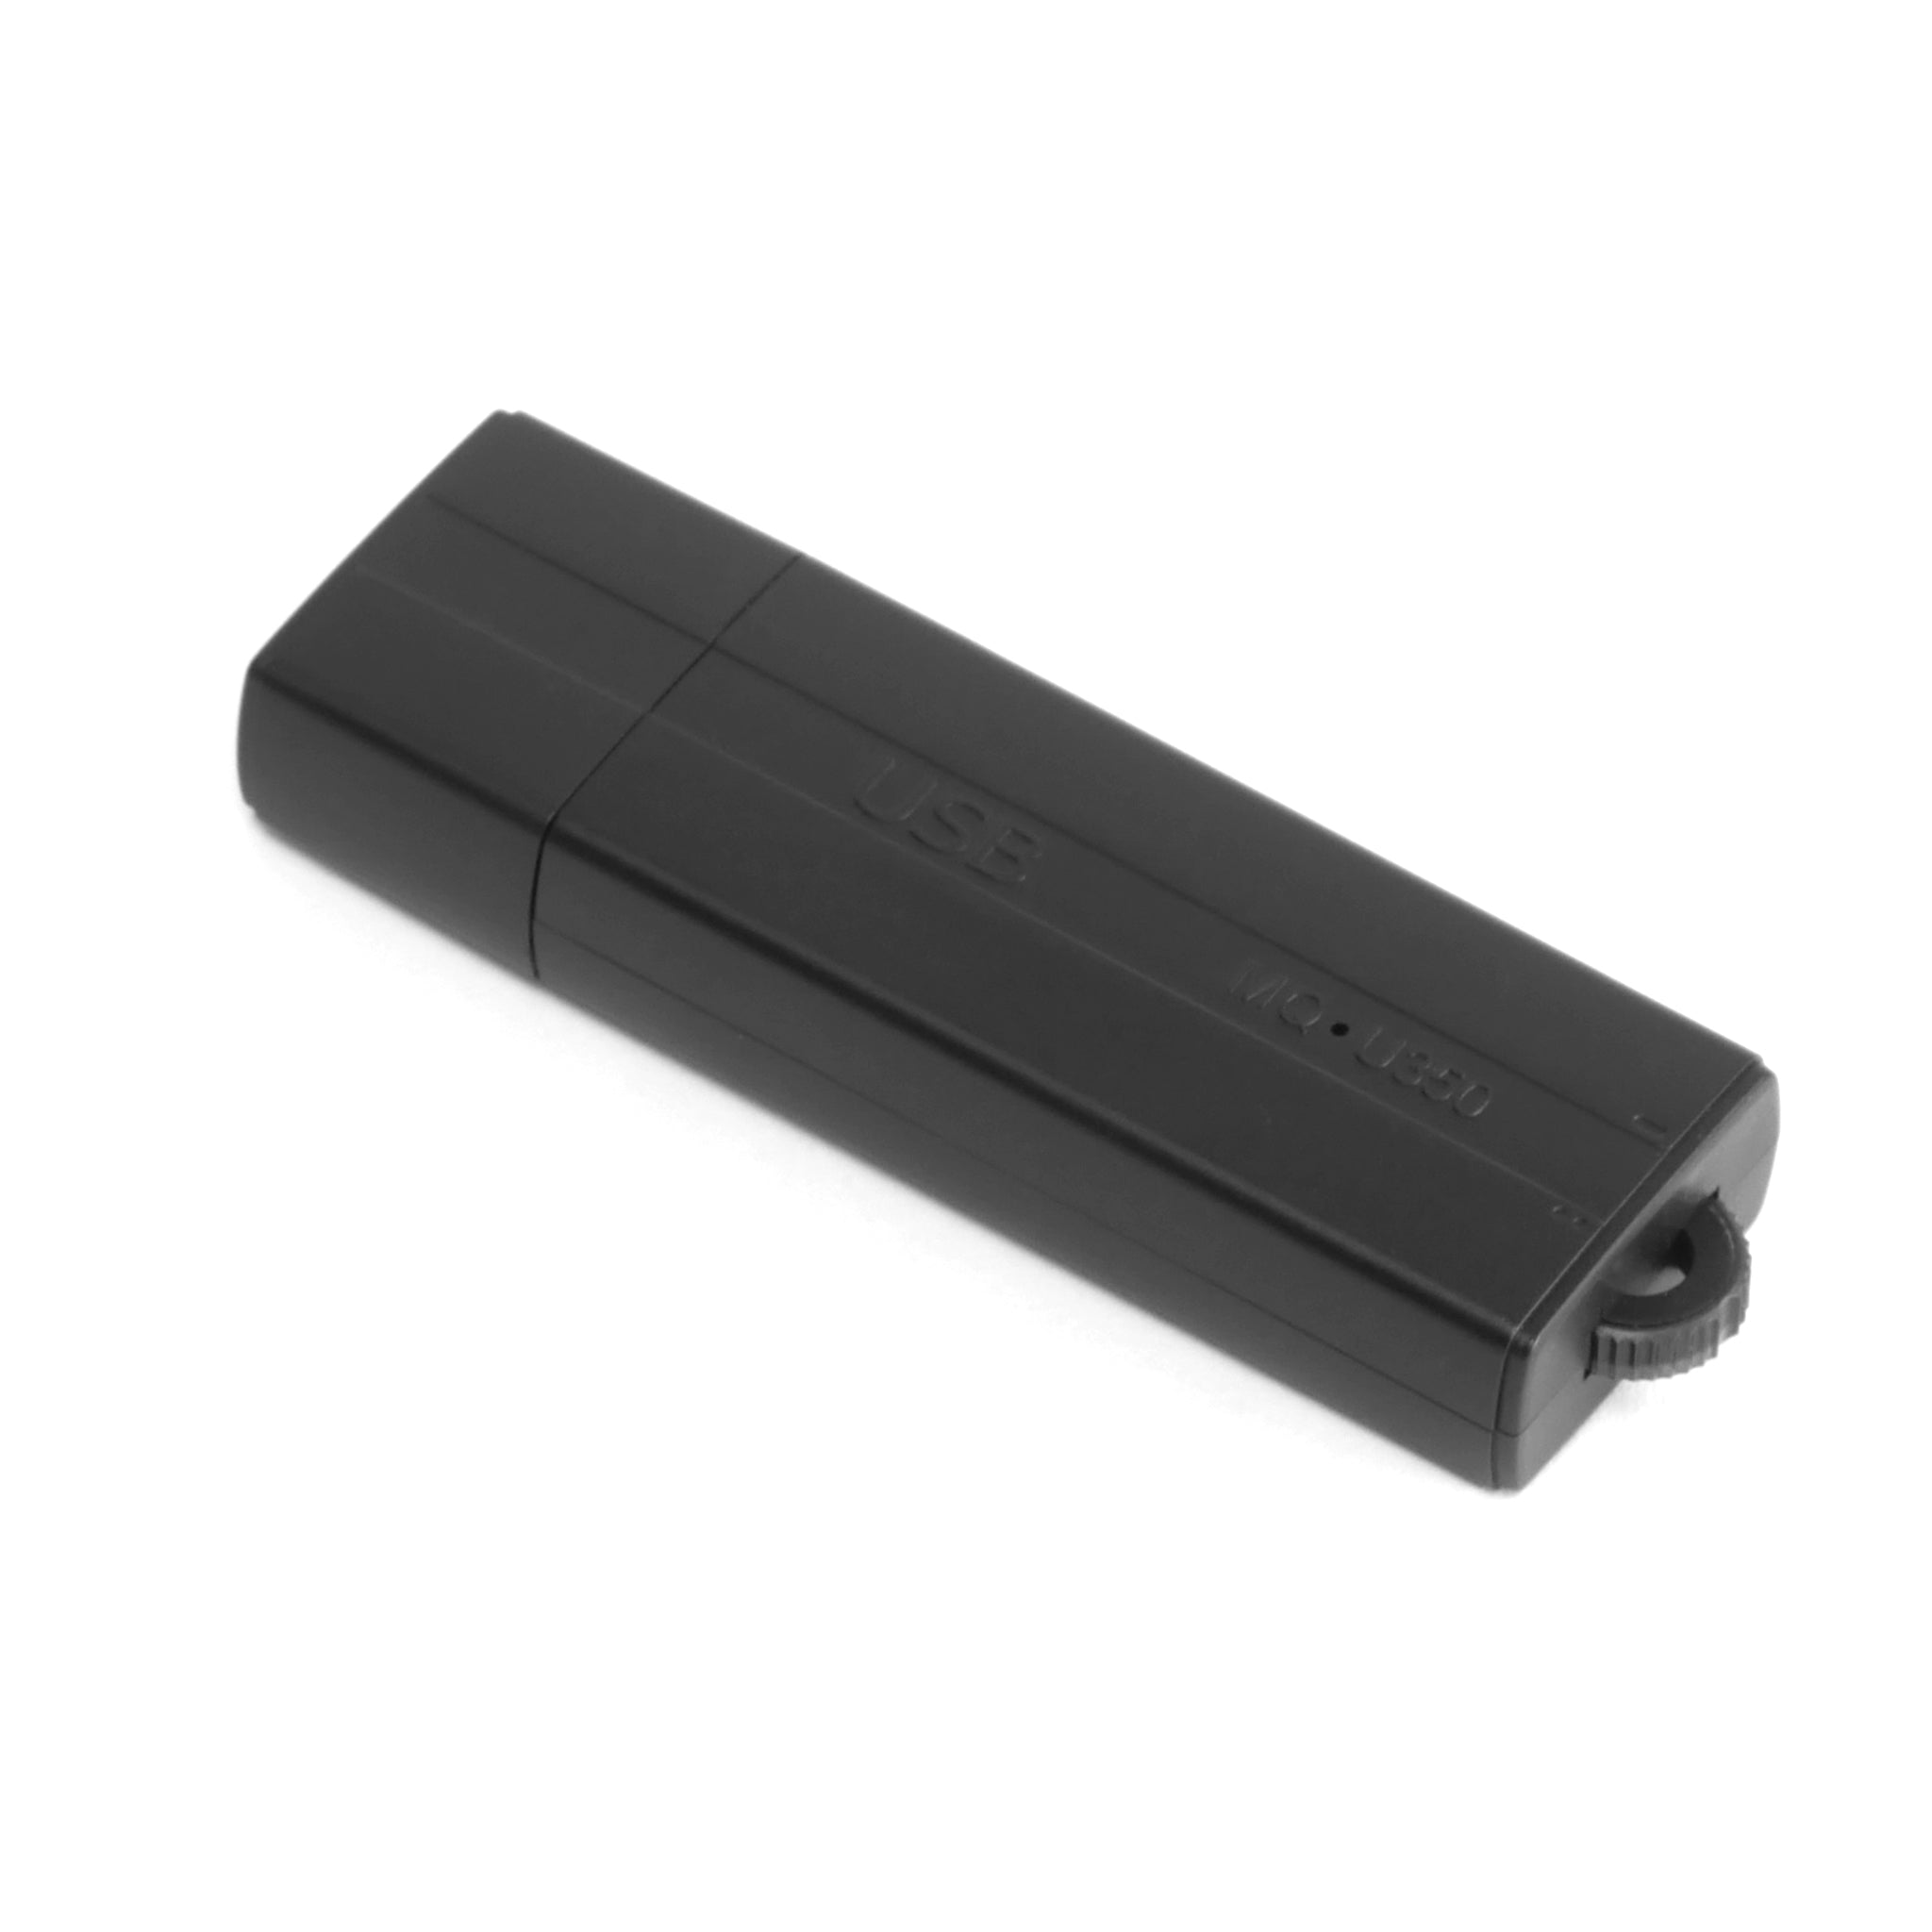 Pro USB Flash Drive Audio Recorder Angled View